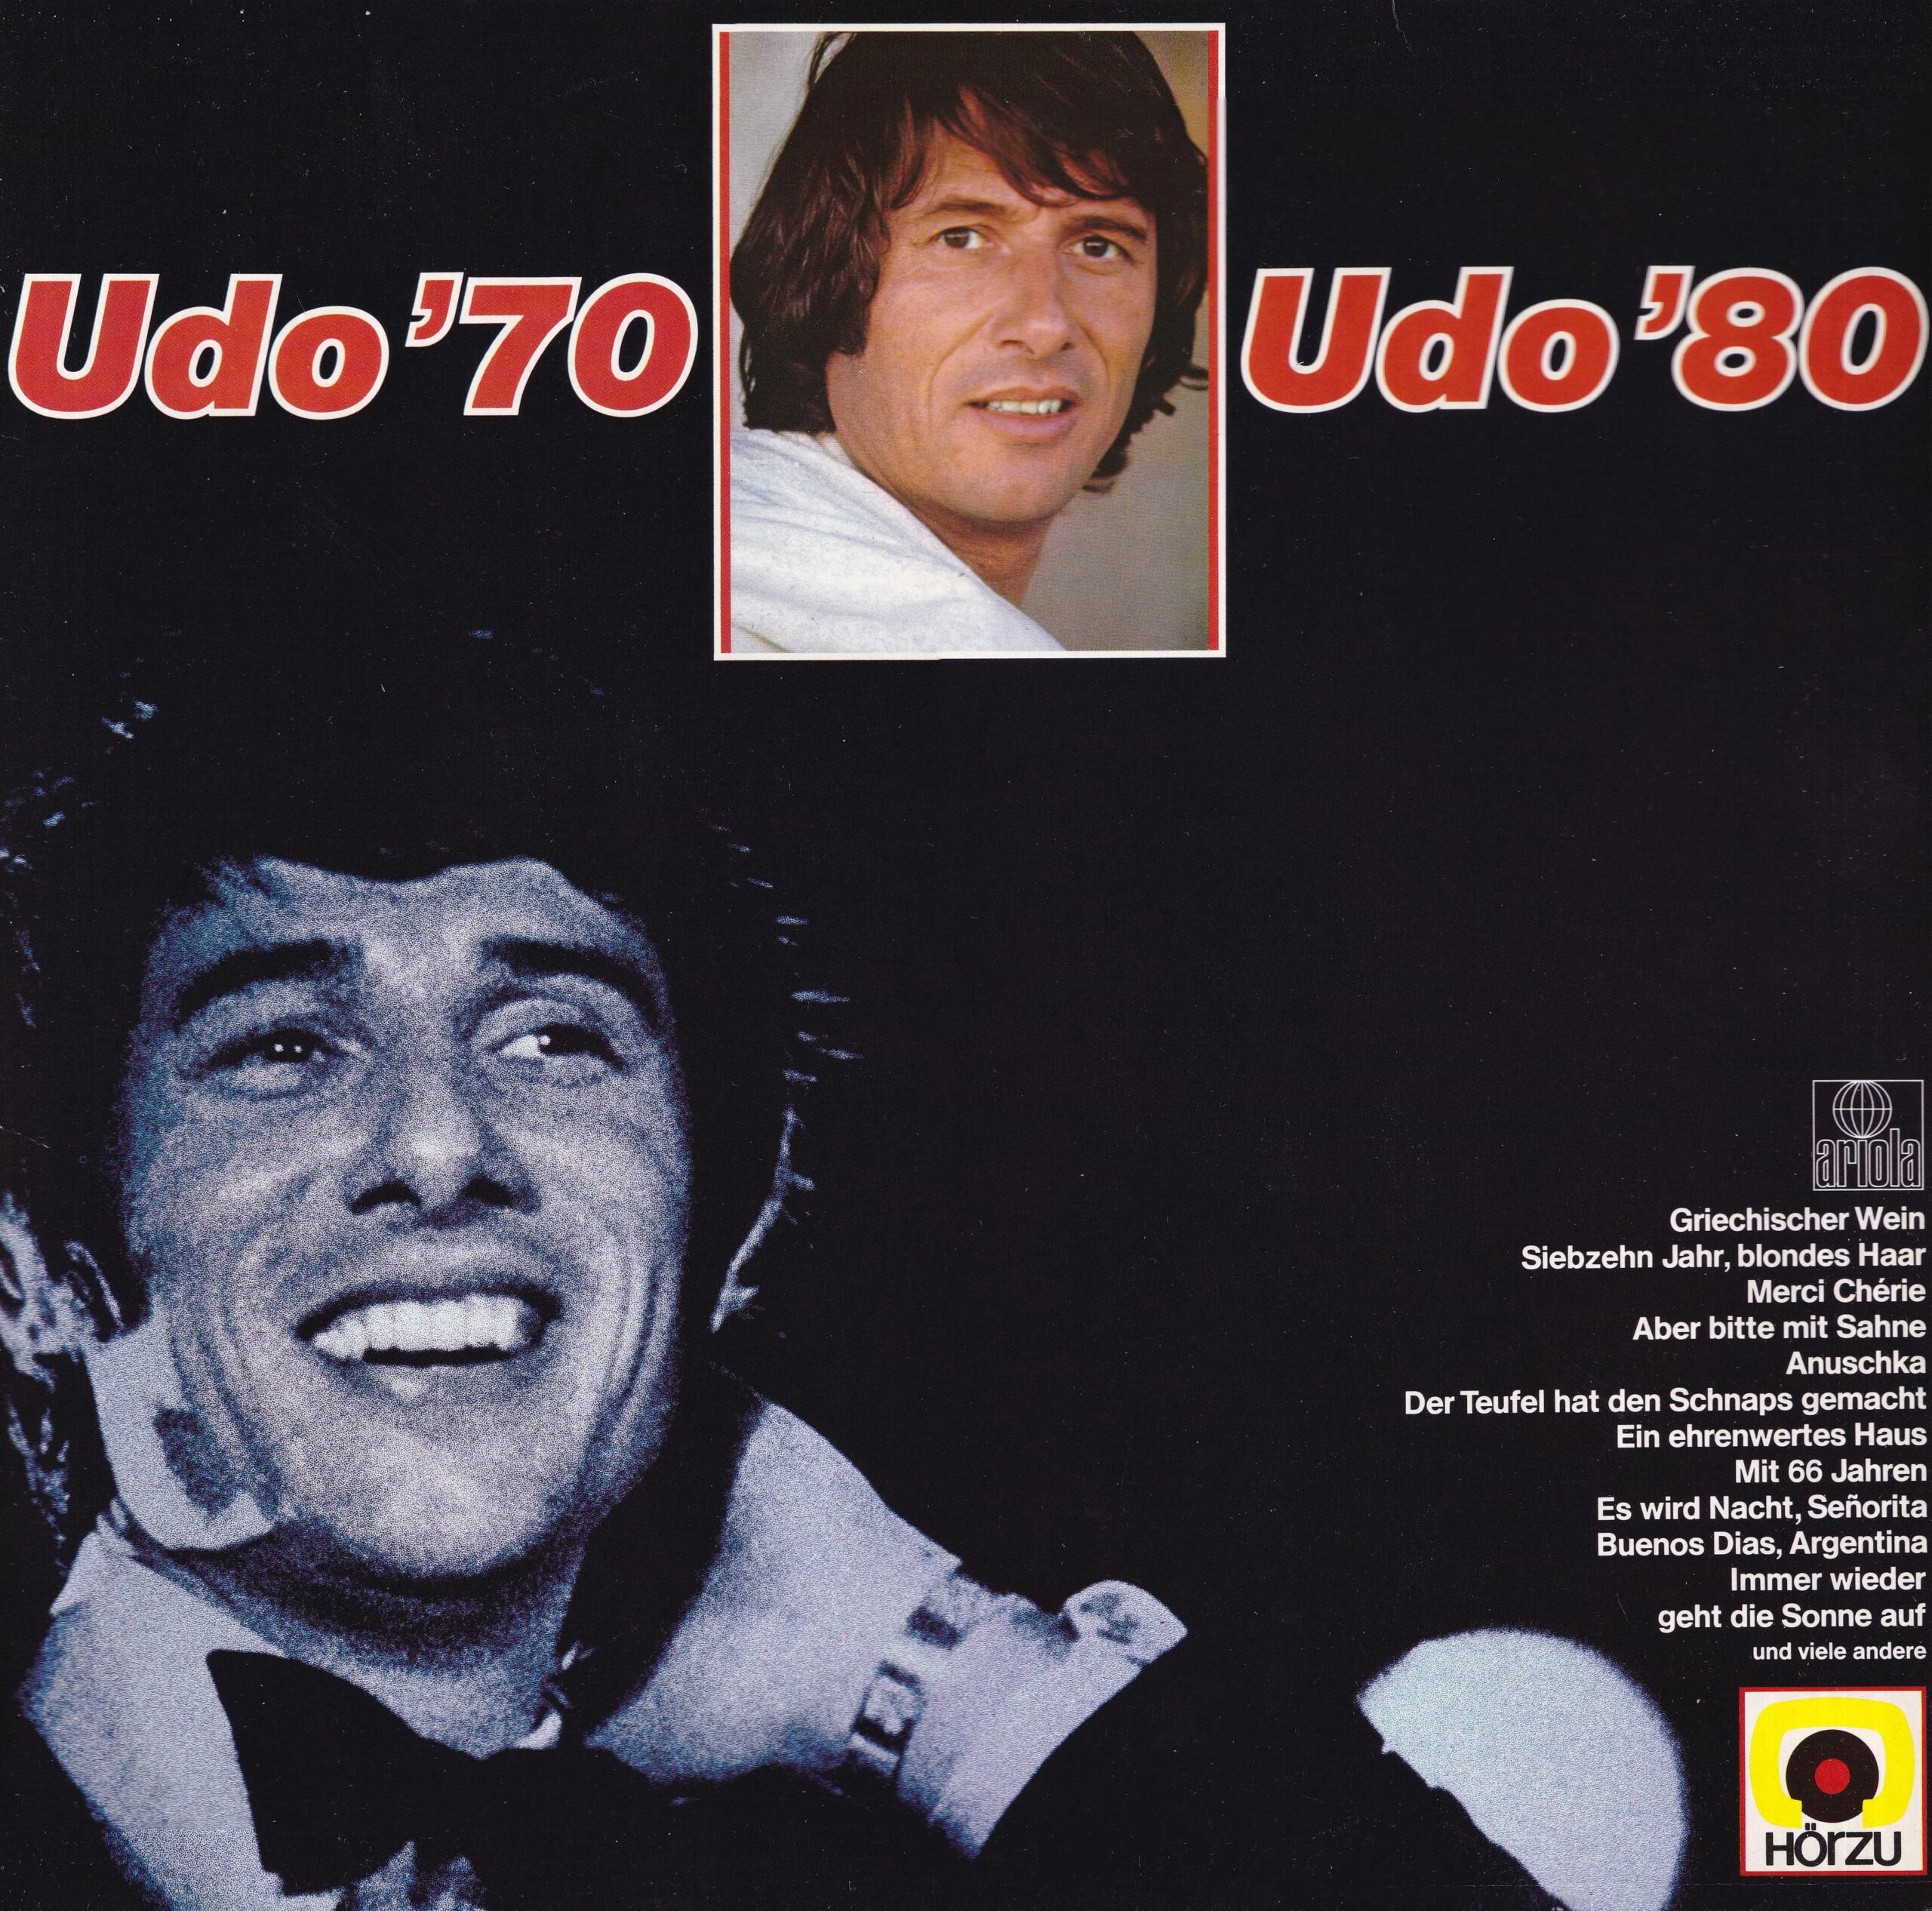 Udo 70 – Udo 80 – 1-min